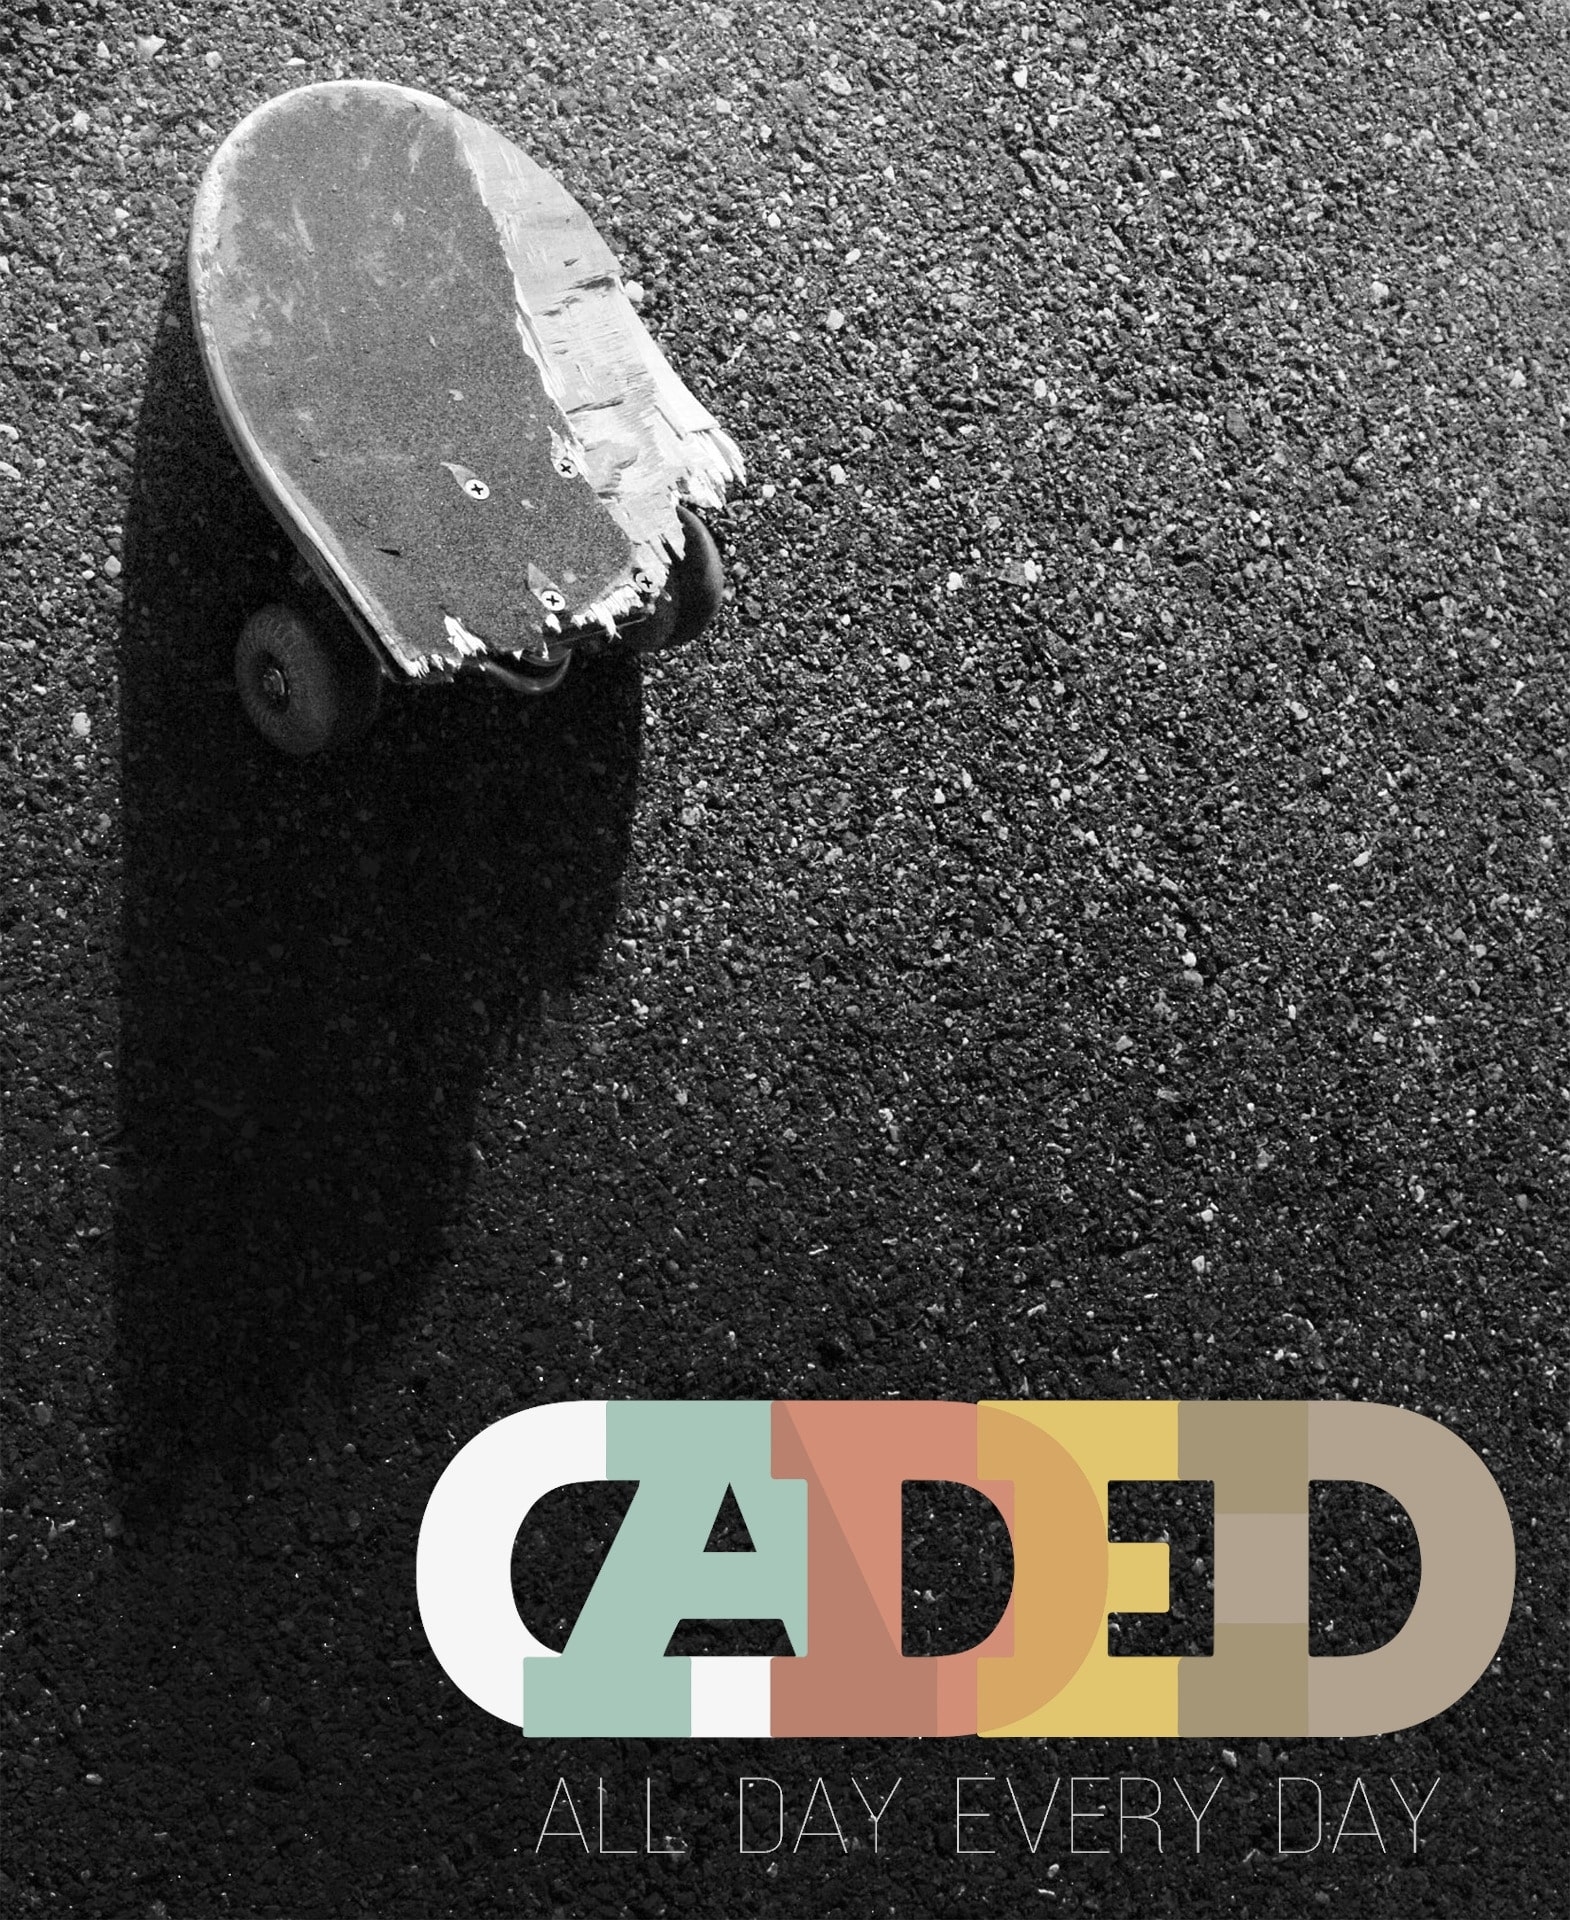 404 page image of broken skateboard